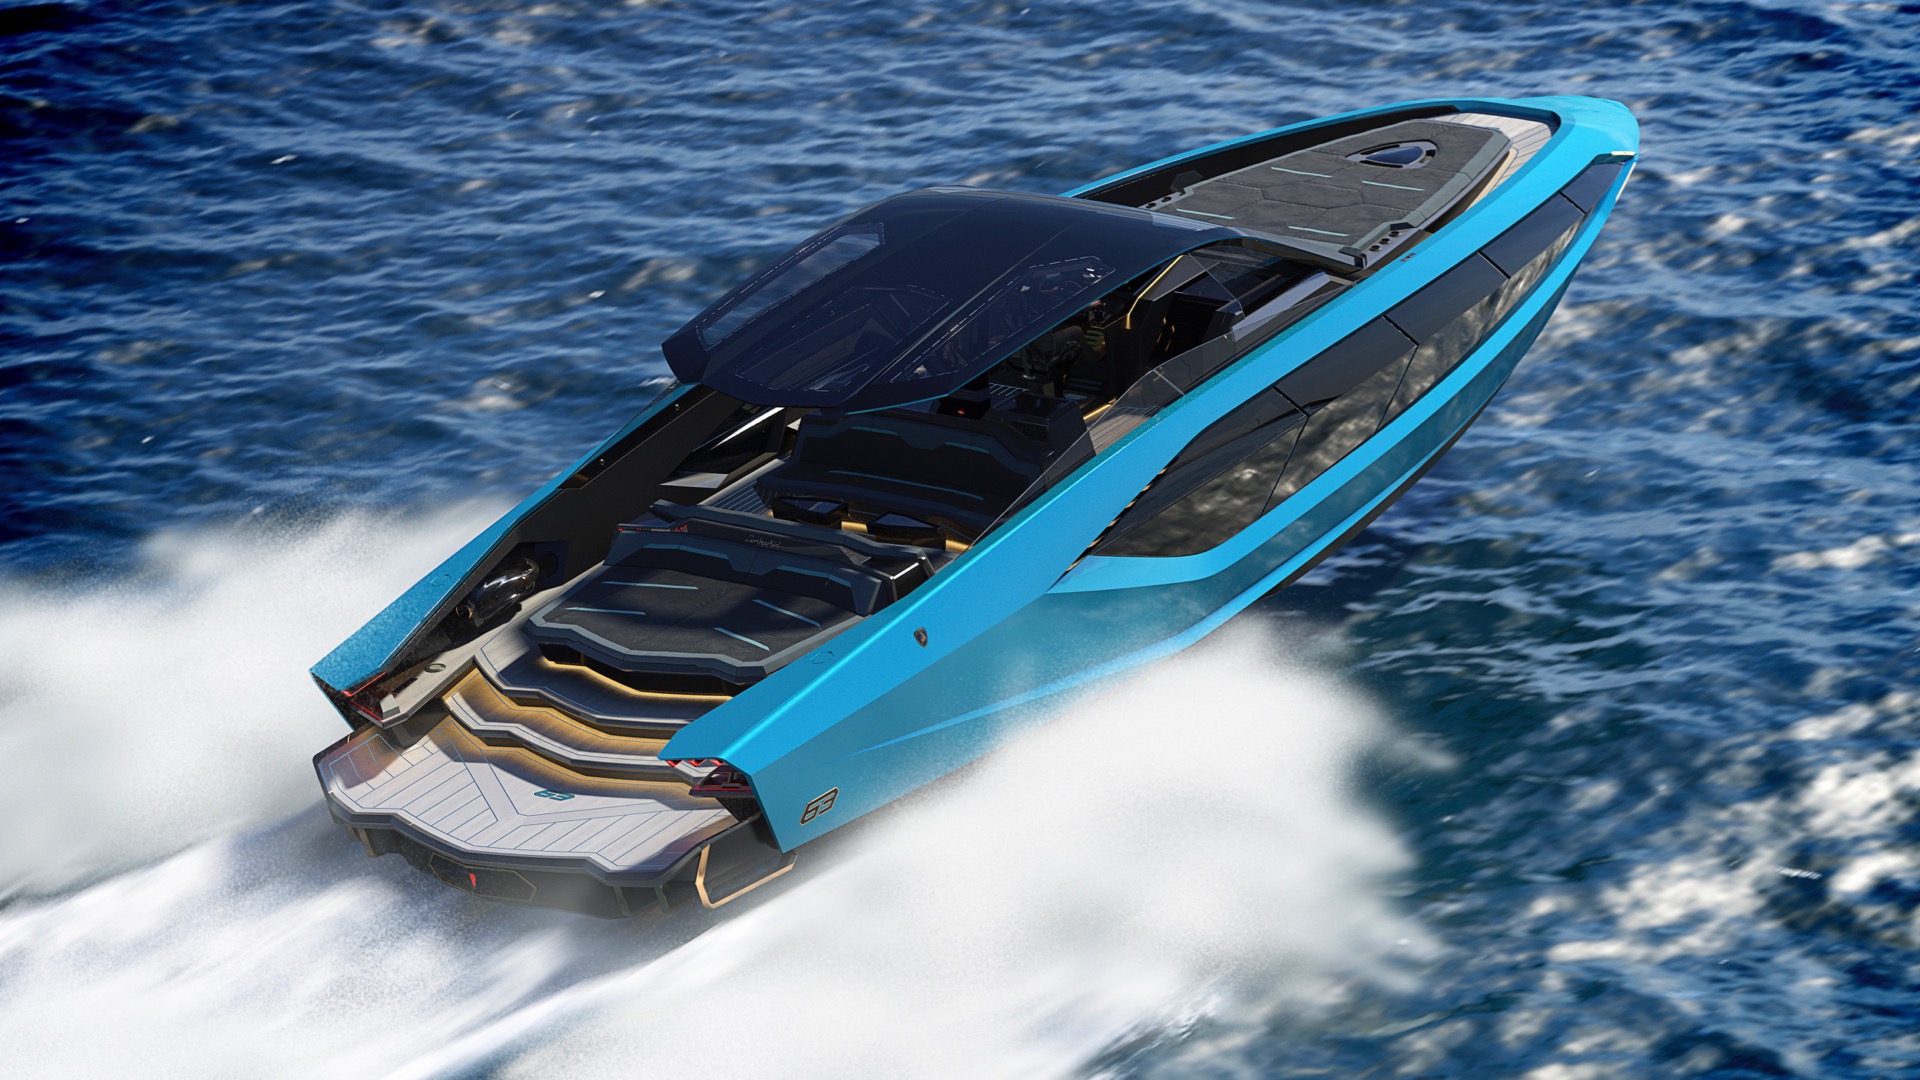 Lamborghini yacht is the supercar of the seas